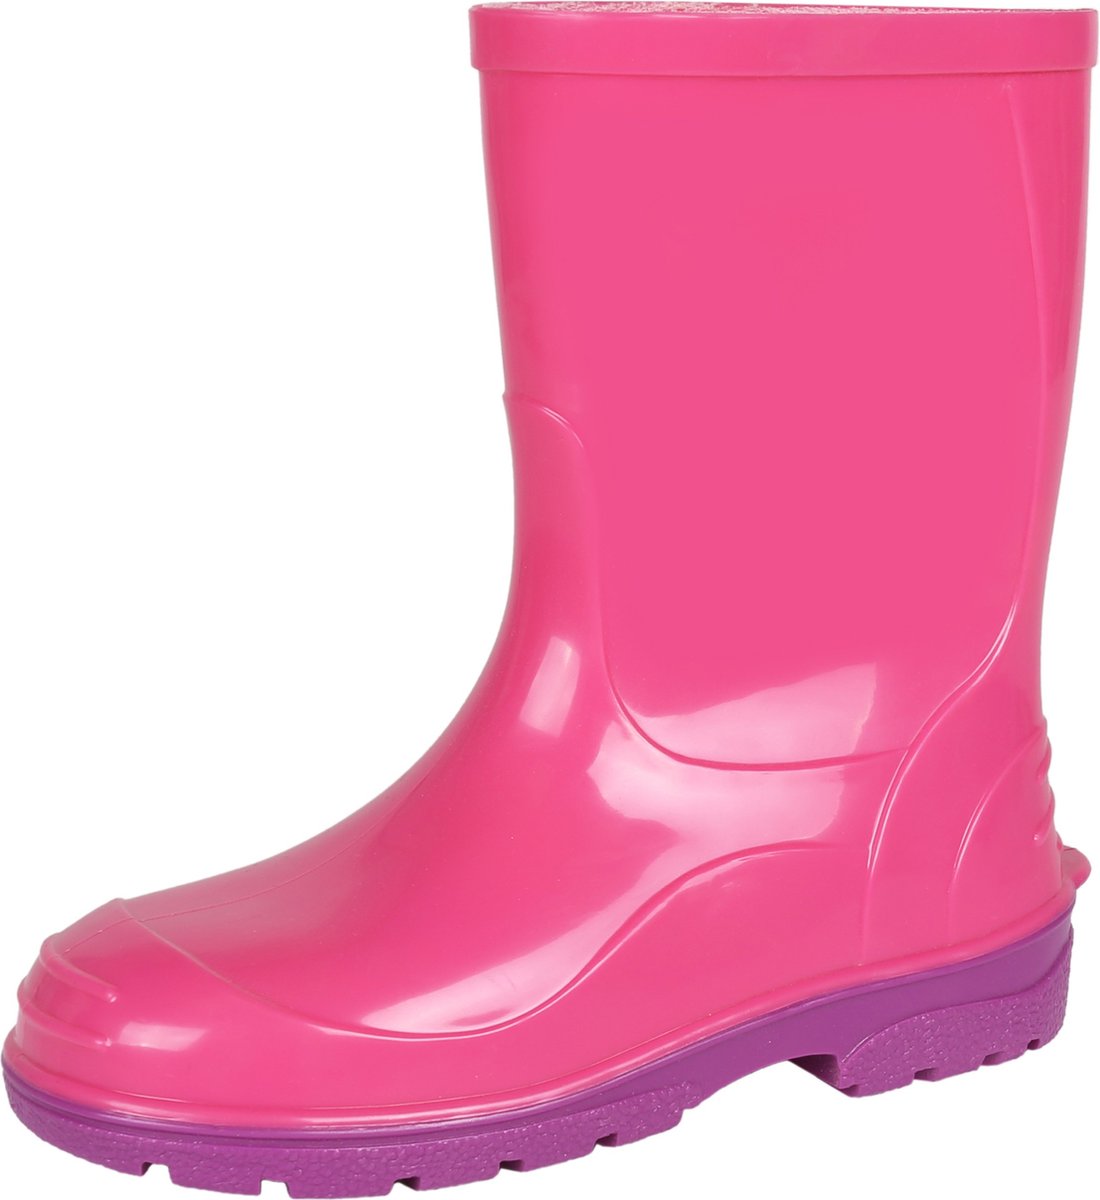 Roze laarzen met paarse zool - Ola LEMIGO / 21